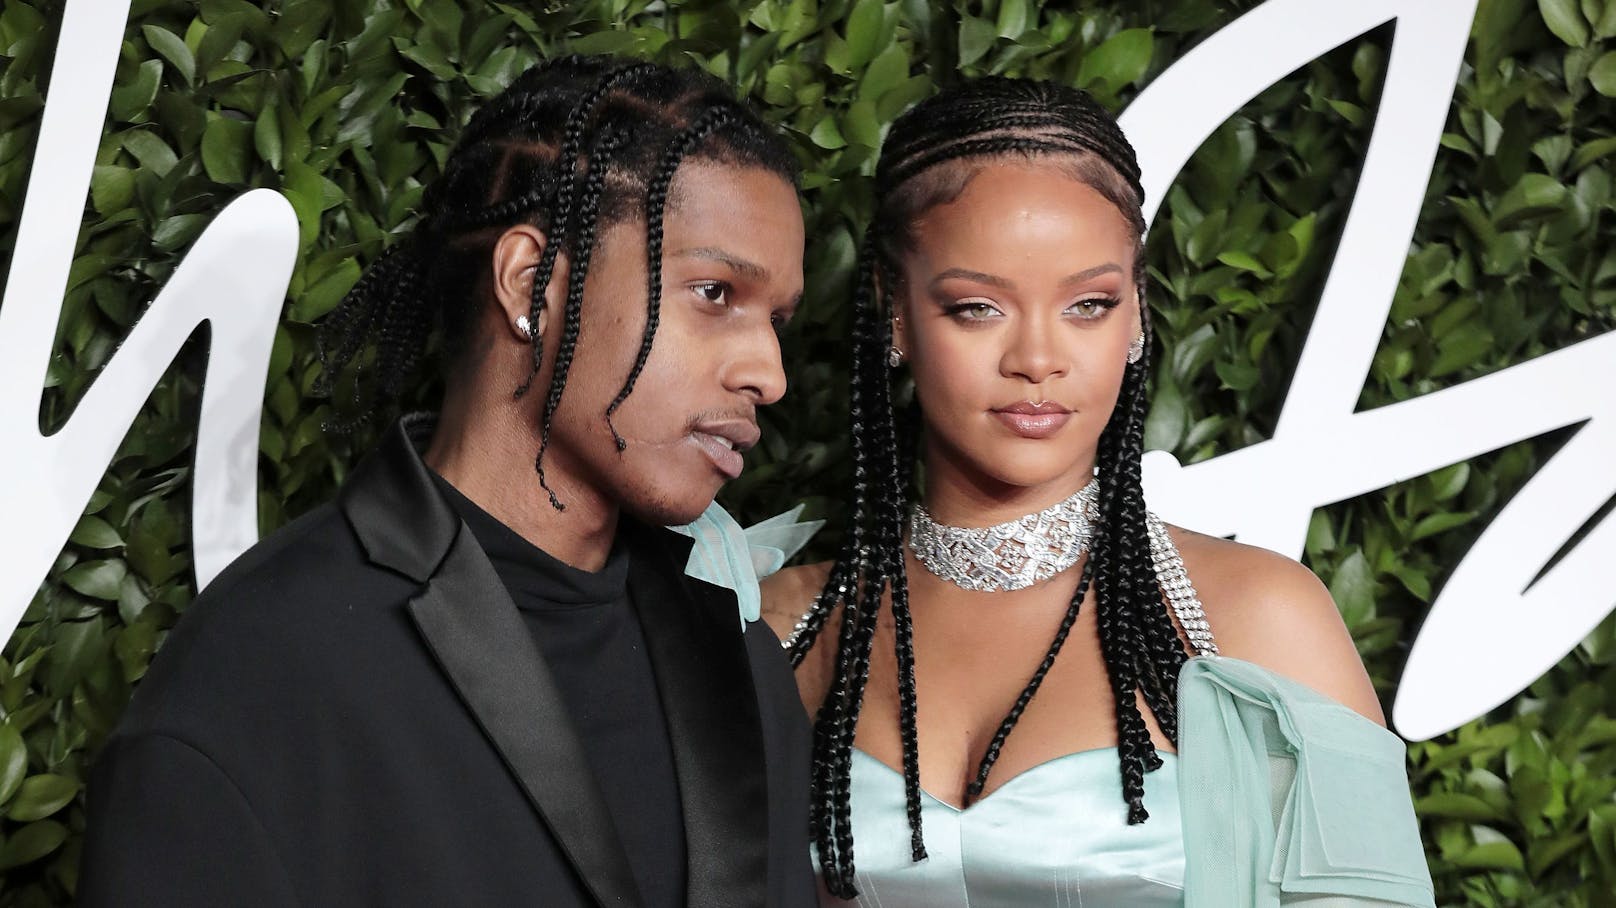 Musik-Superstar <strong>Rihanna</strong> und Rapper <strong>A$AP Rocky</strong> schüren die Gerüchte um eine mögliche Liebesbeziehung.